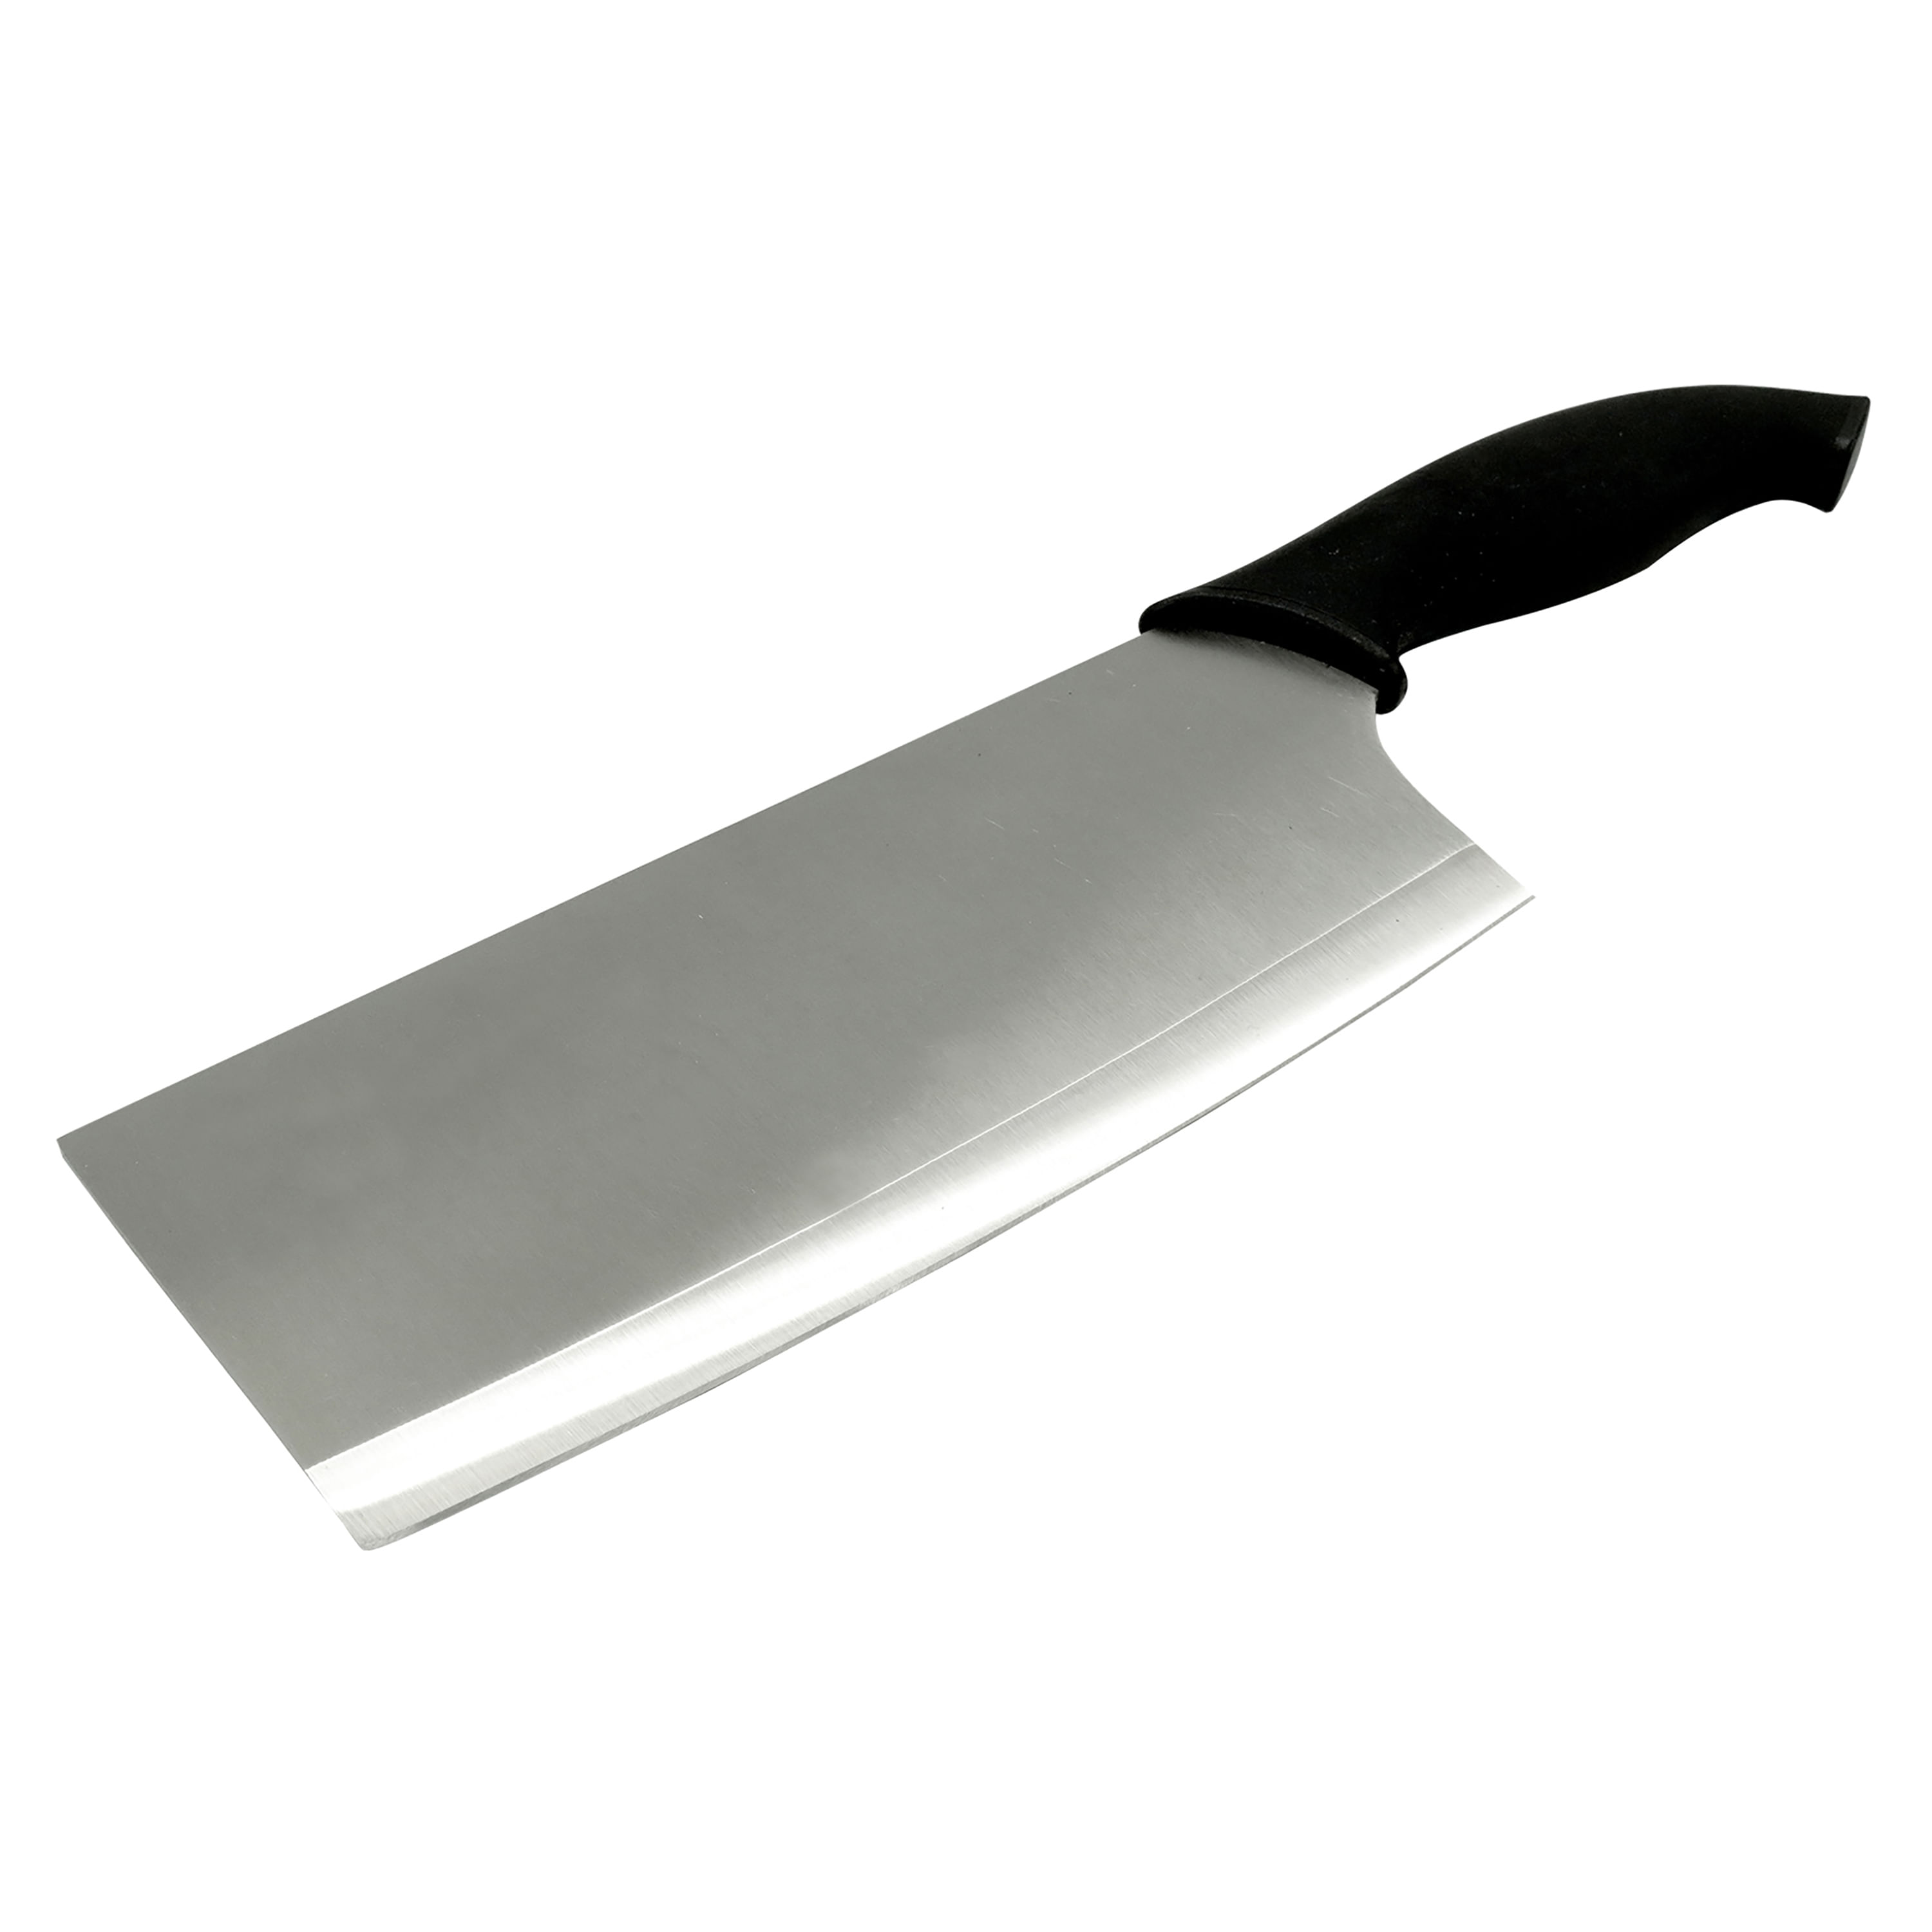 Cuchillo de Sierra - Fahrenheit 350 Tienda Gastronómica